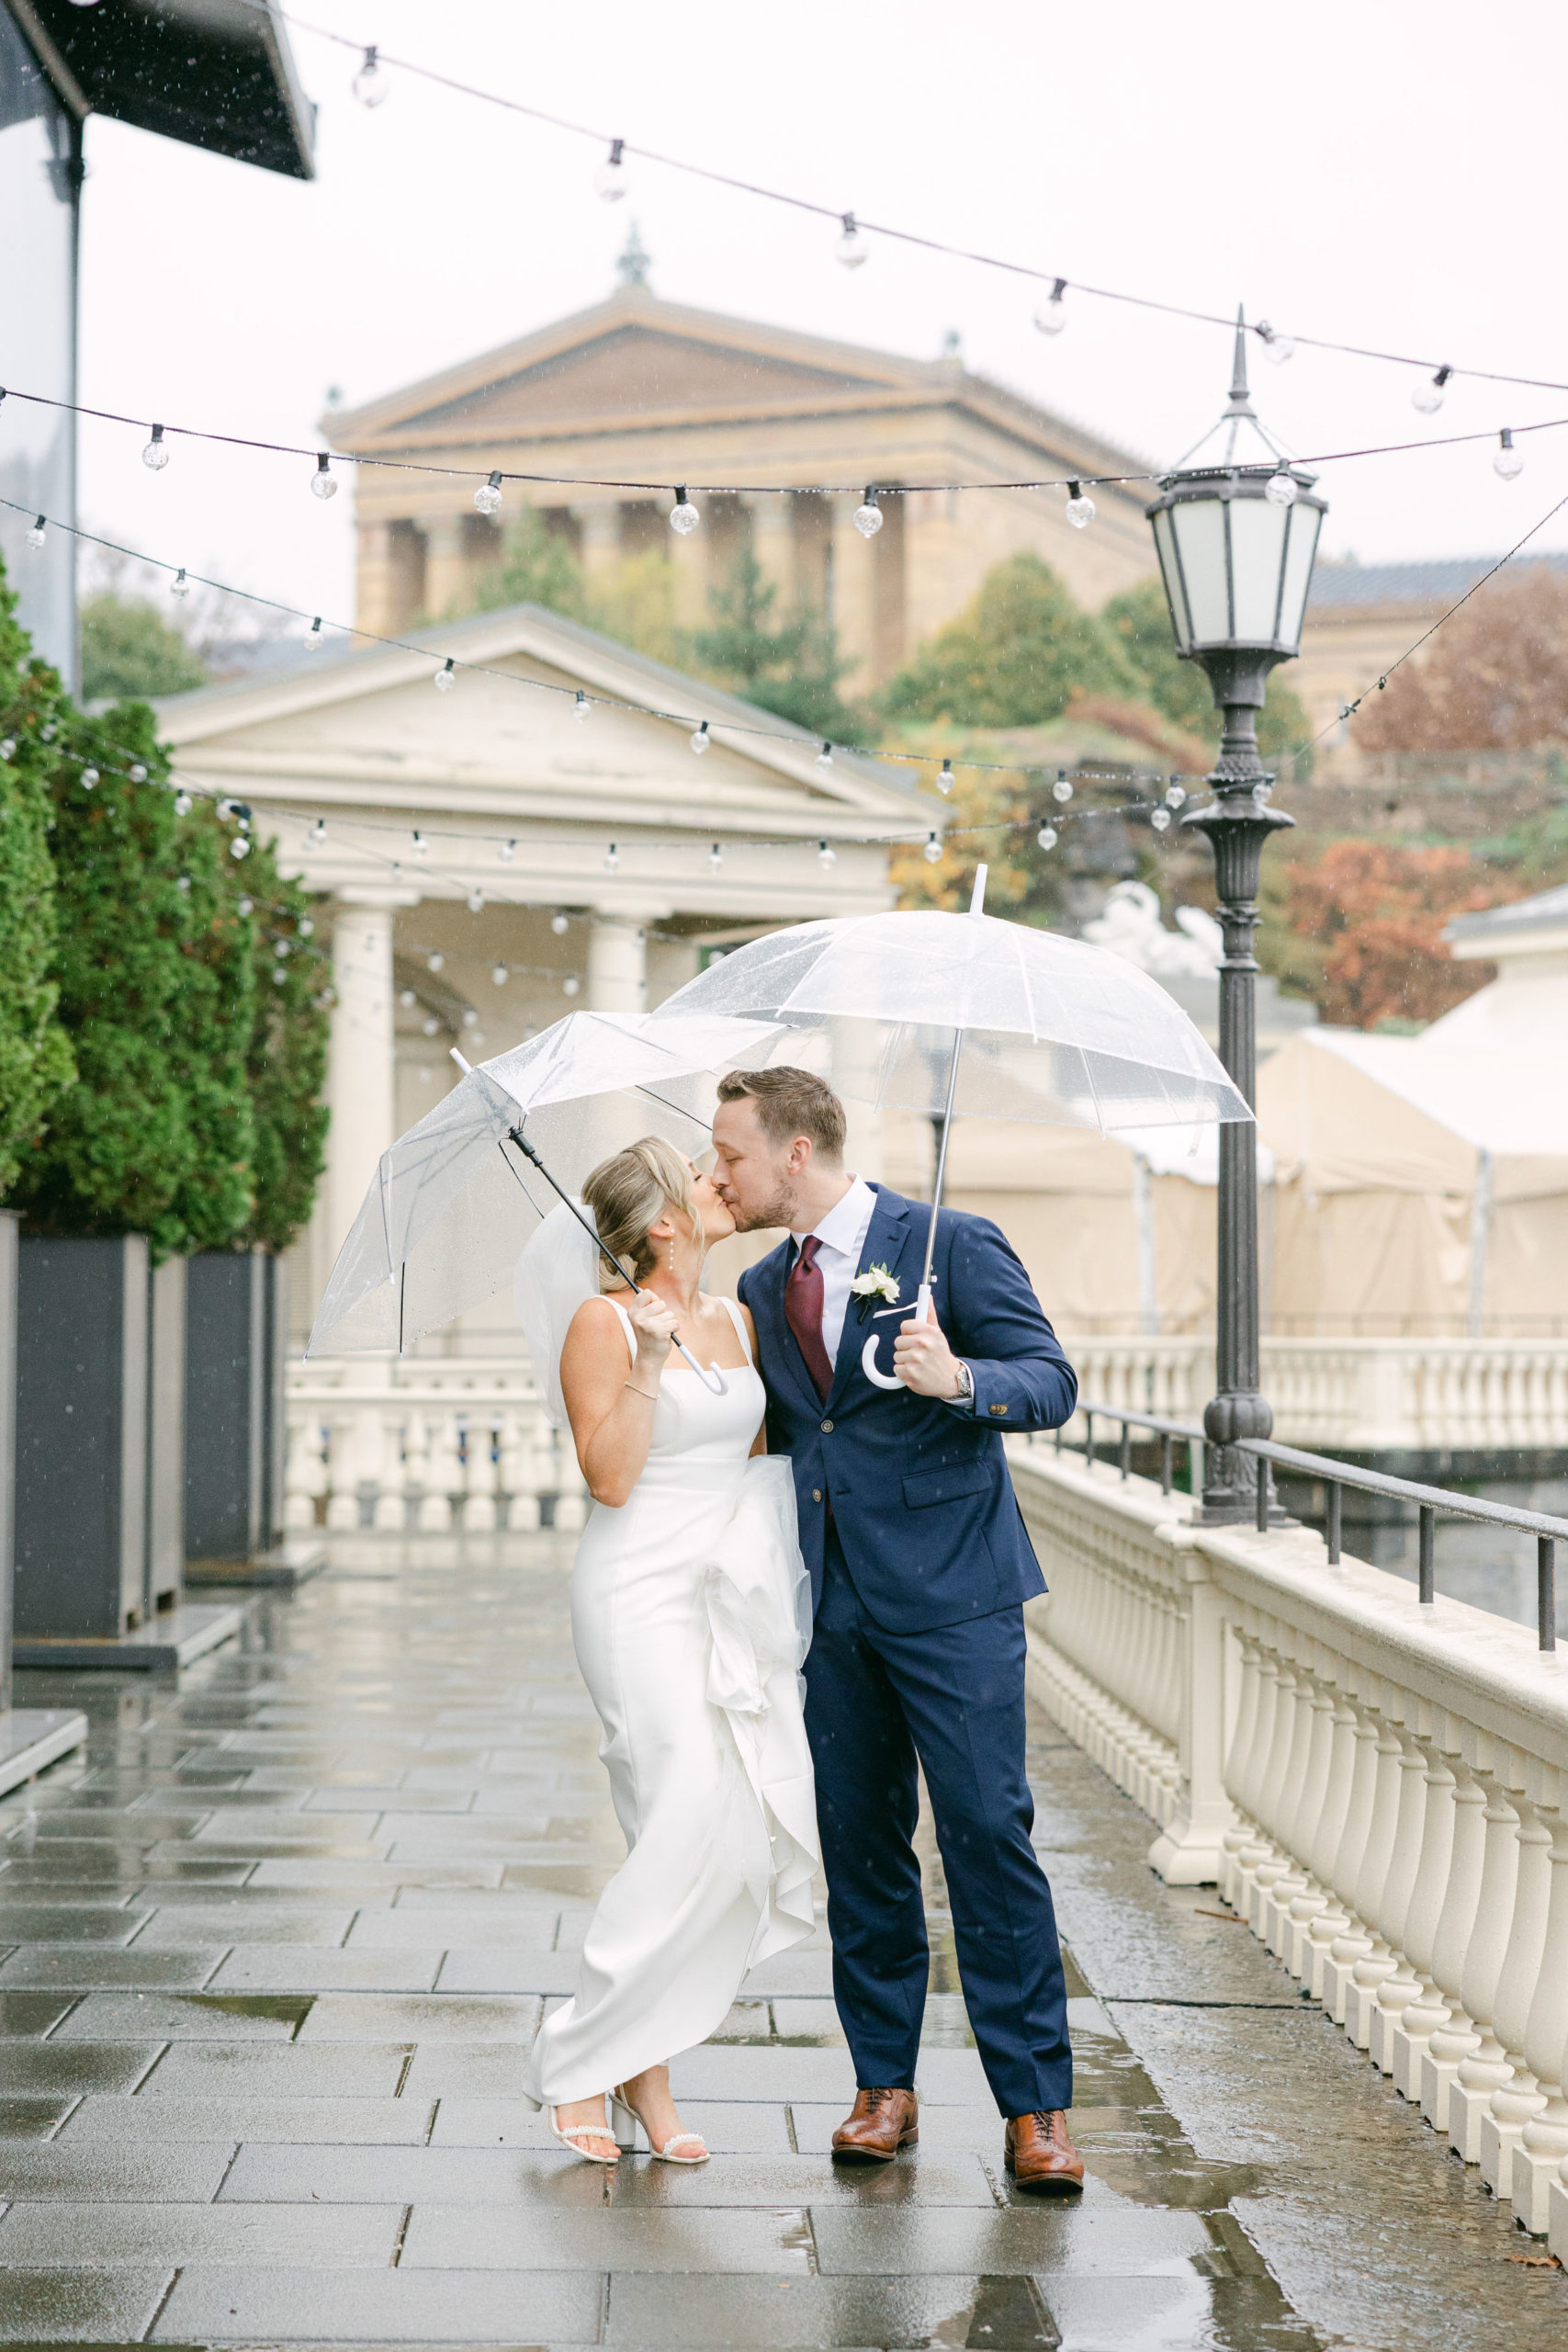 9 Tips To Best Prepare For A Rainy Wedding Day | Pennsylvania Wedding Photographer